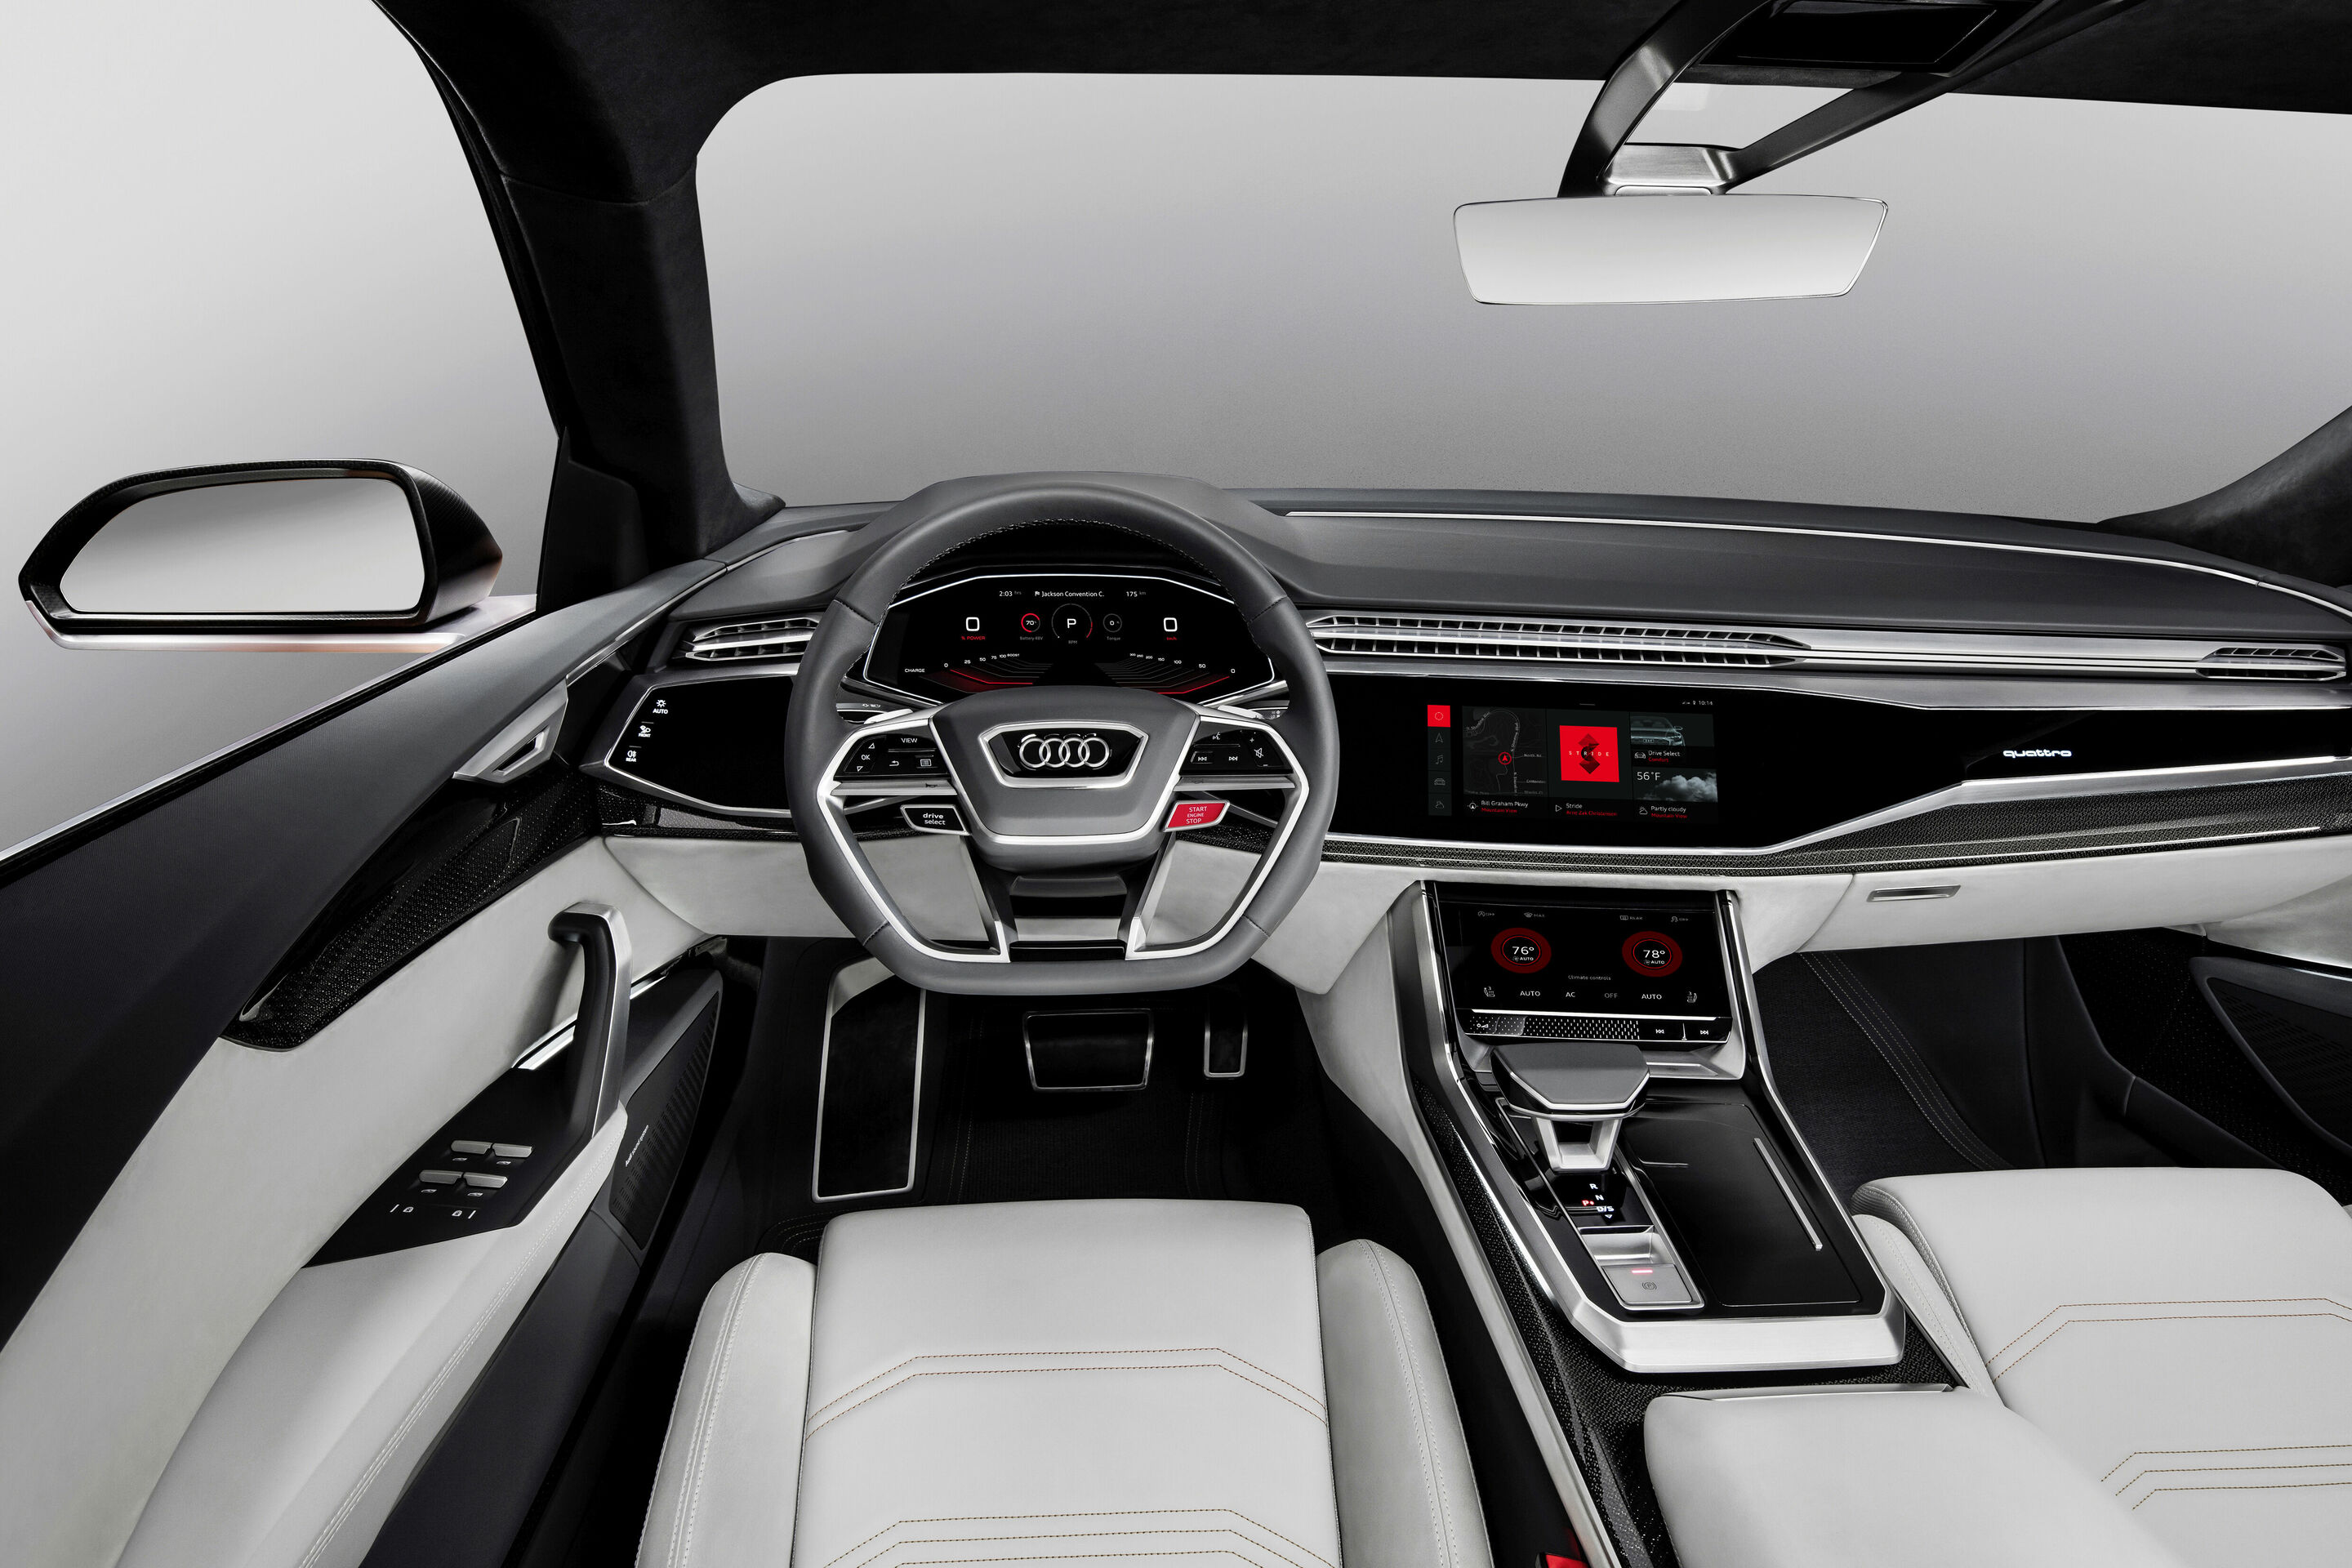 Audi zeigt integriertes Android-Betriebssystem im Audi Q8 sport